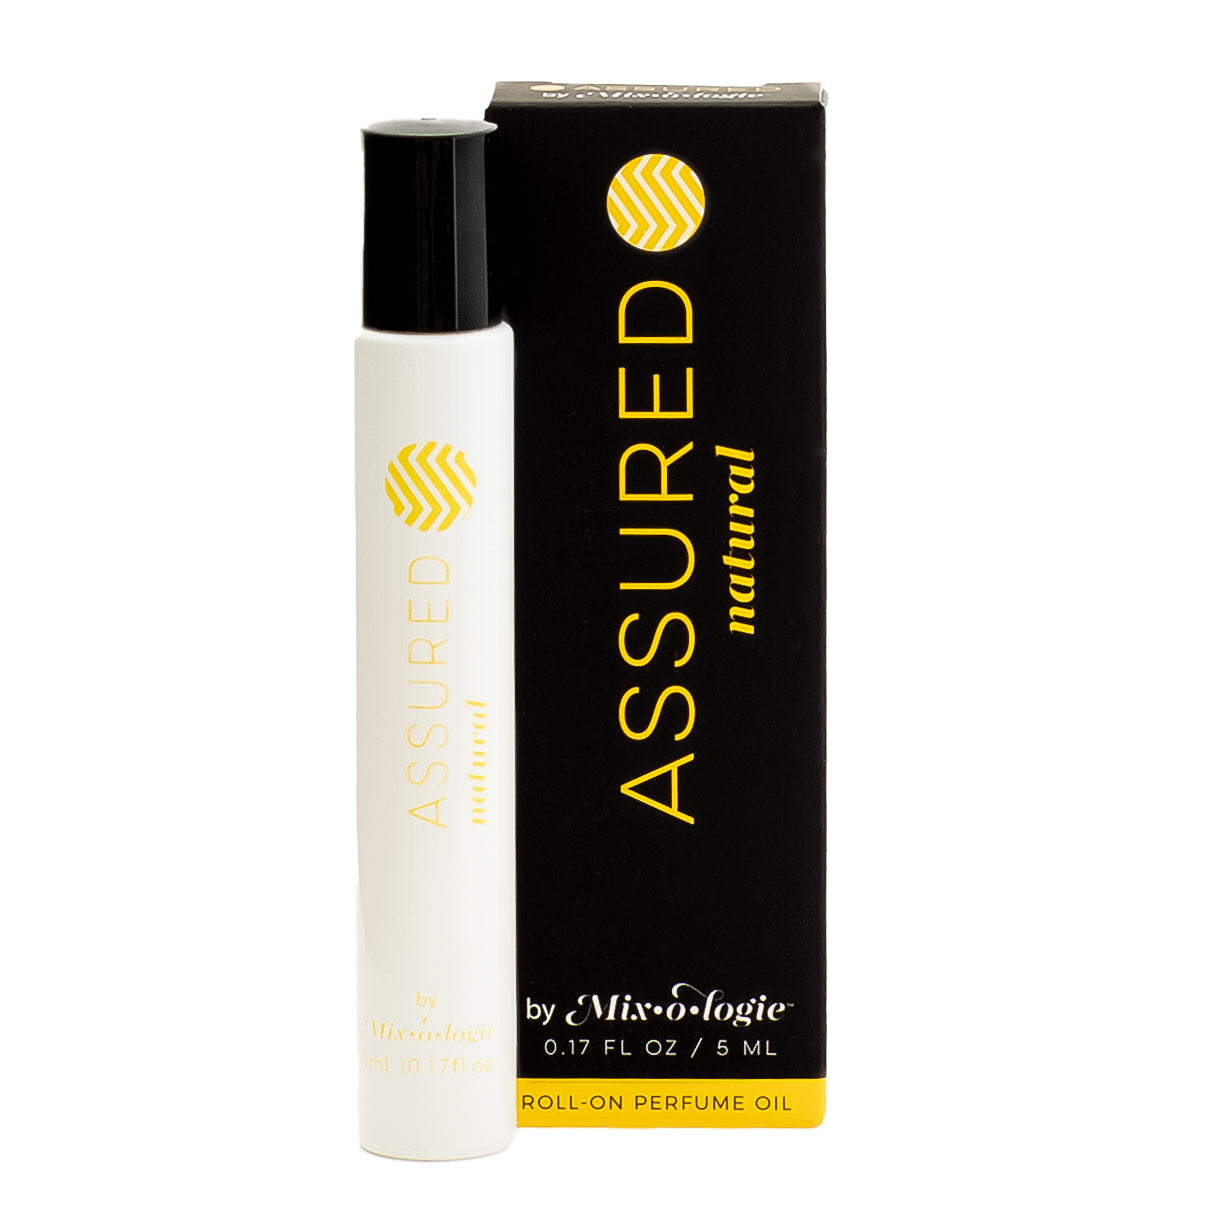 Assured (natural) - Perfume Oil Rollerball (5 mL)